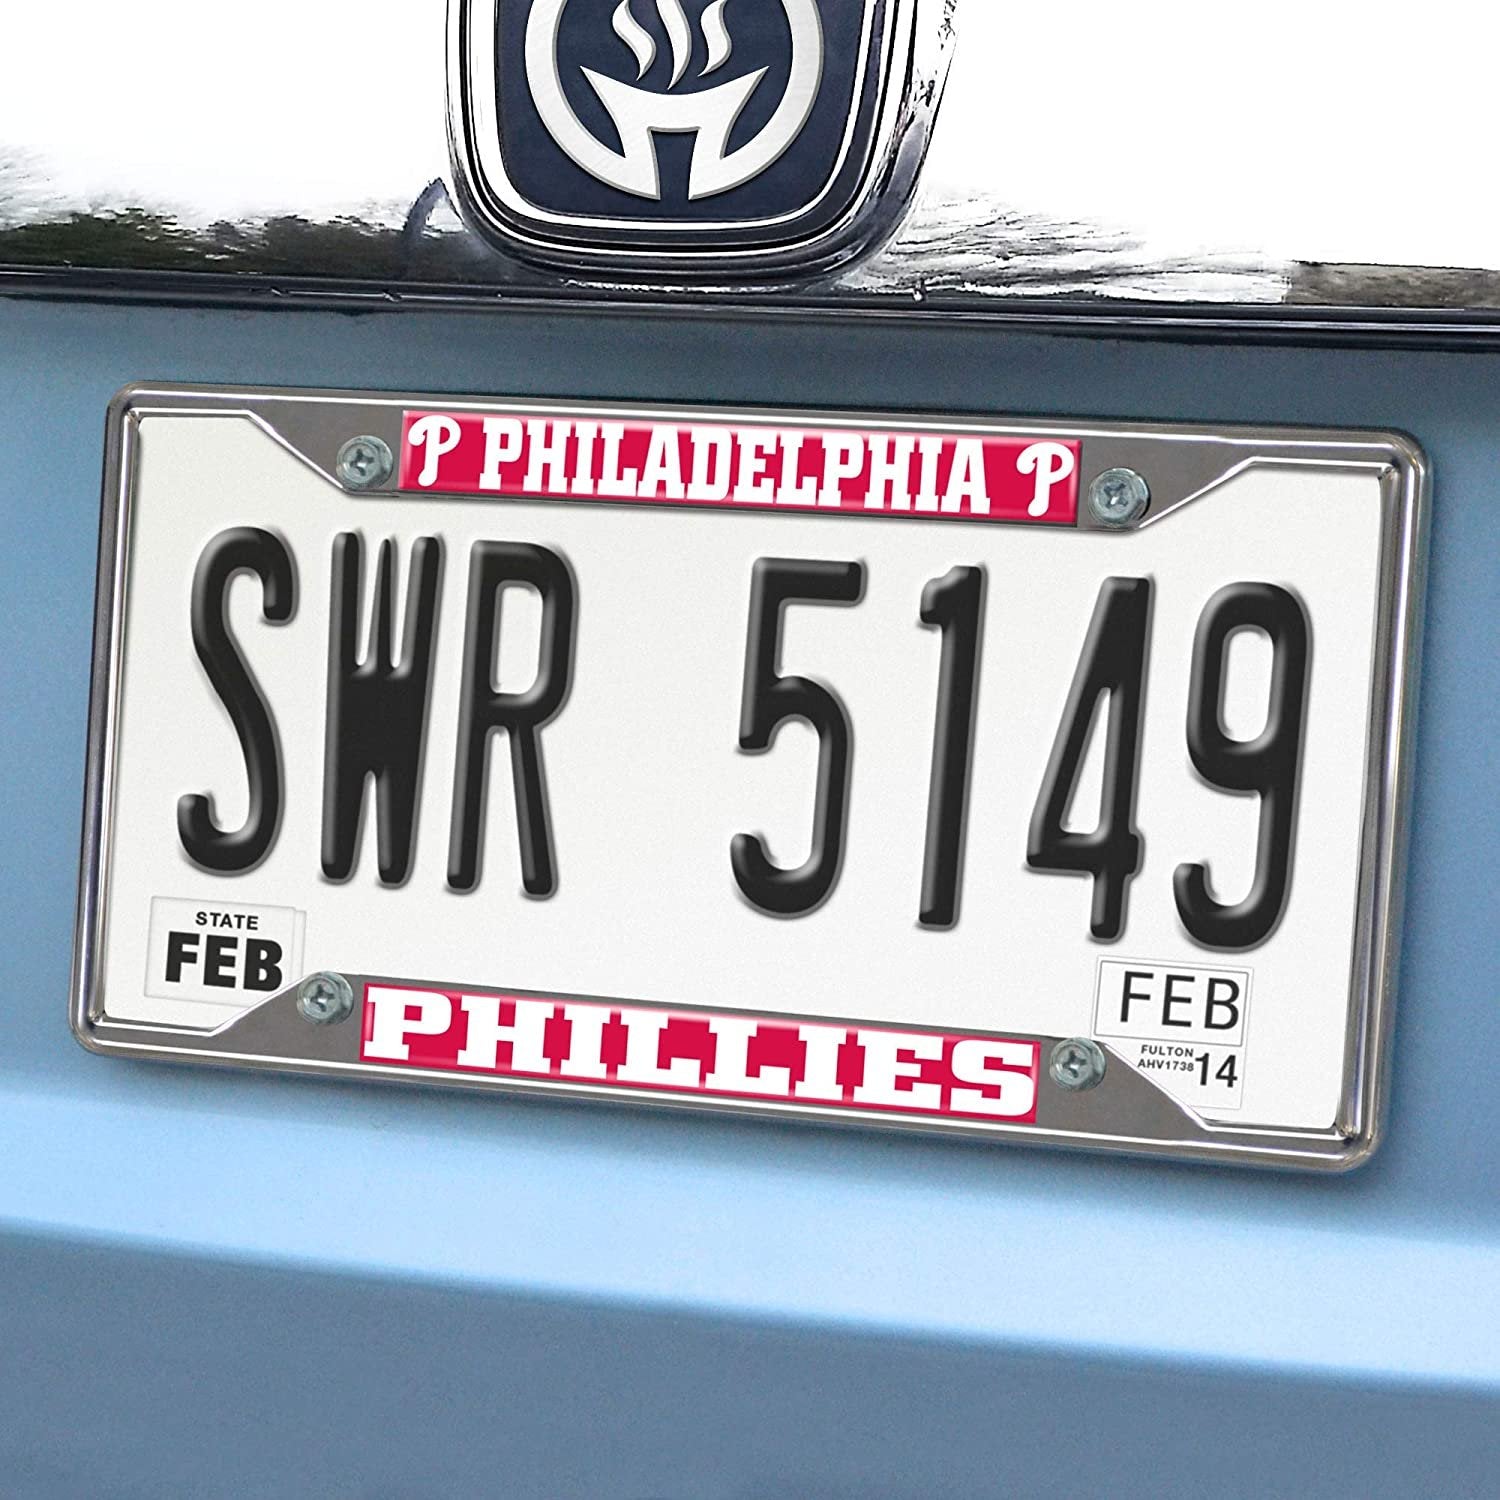 Philadelphia Phillies Metal License Plate Frame Tag Cover Chrome 6x12 Inch